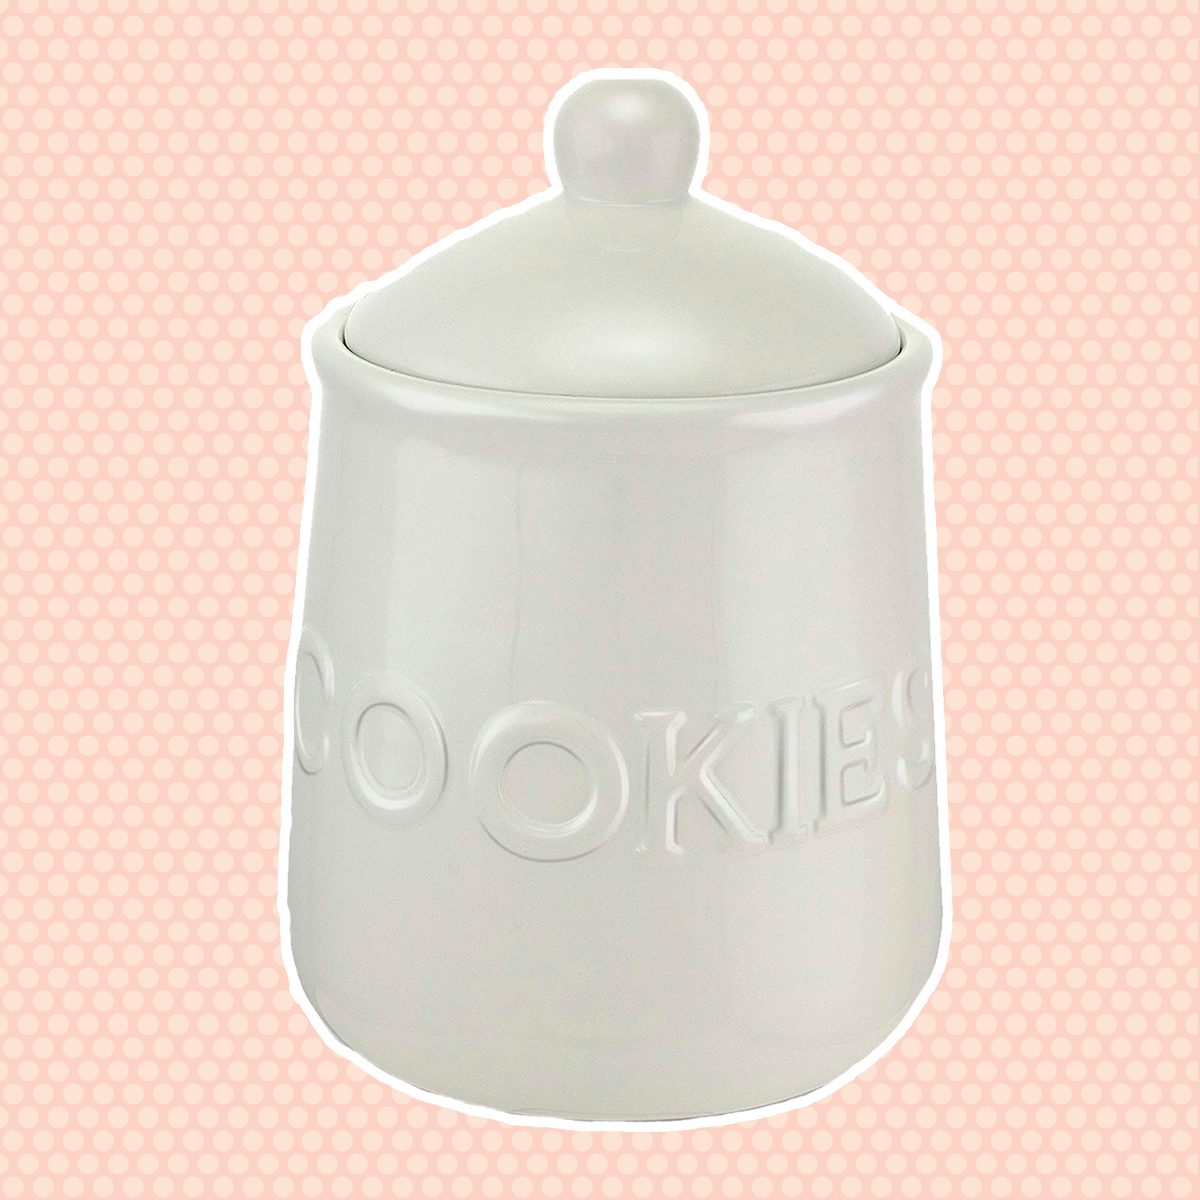 KOVOT Ceramic Classic Cookie Jar